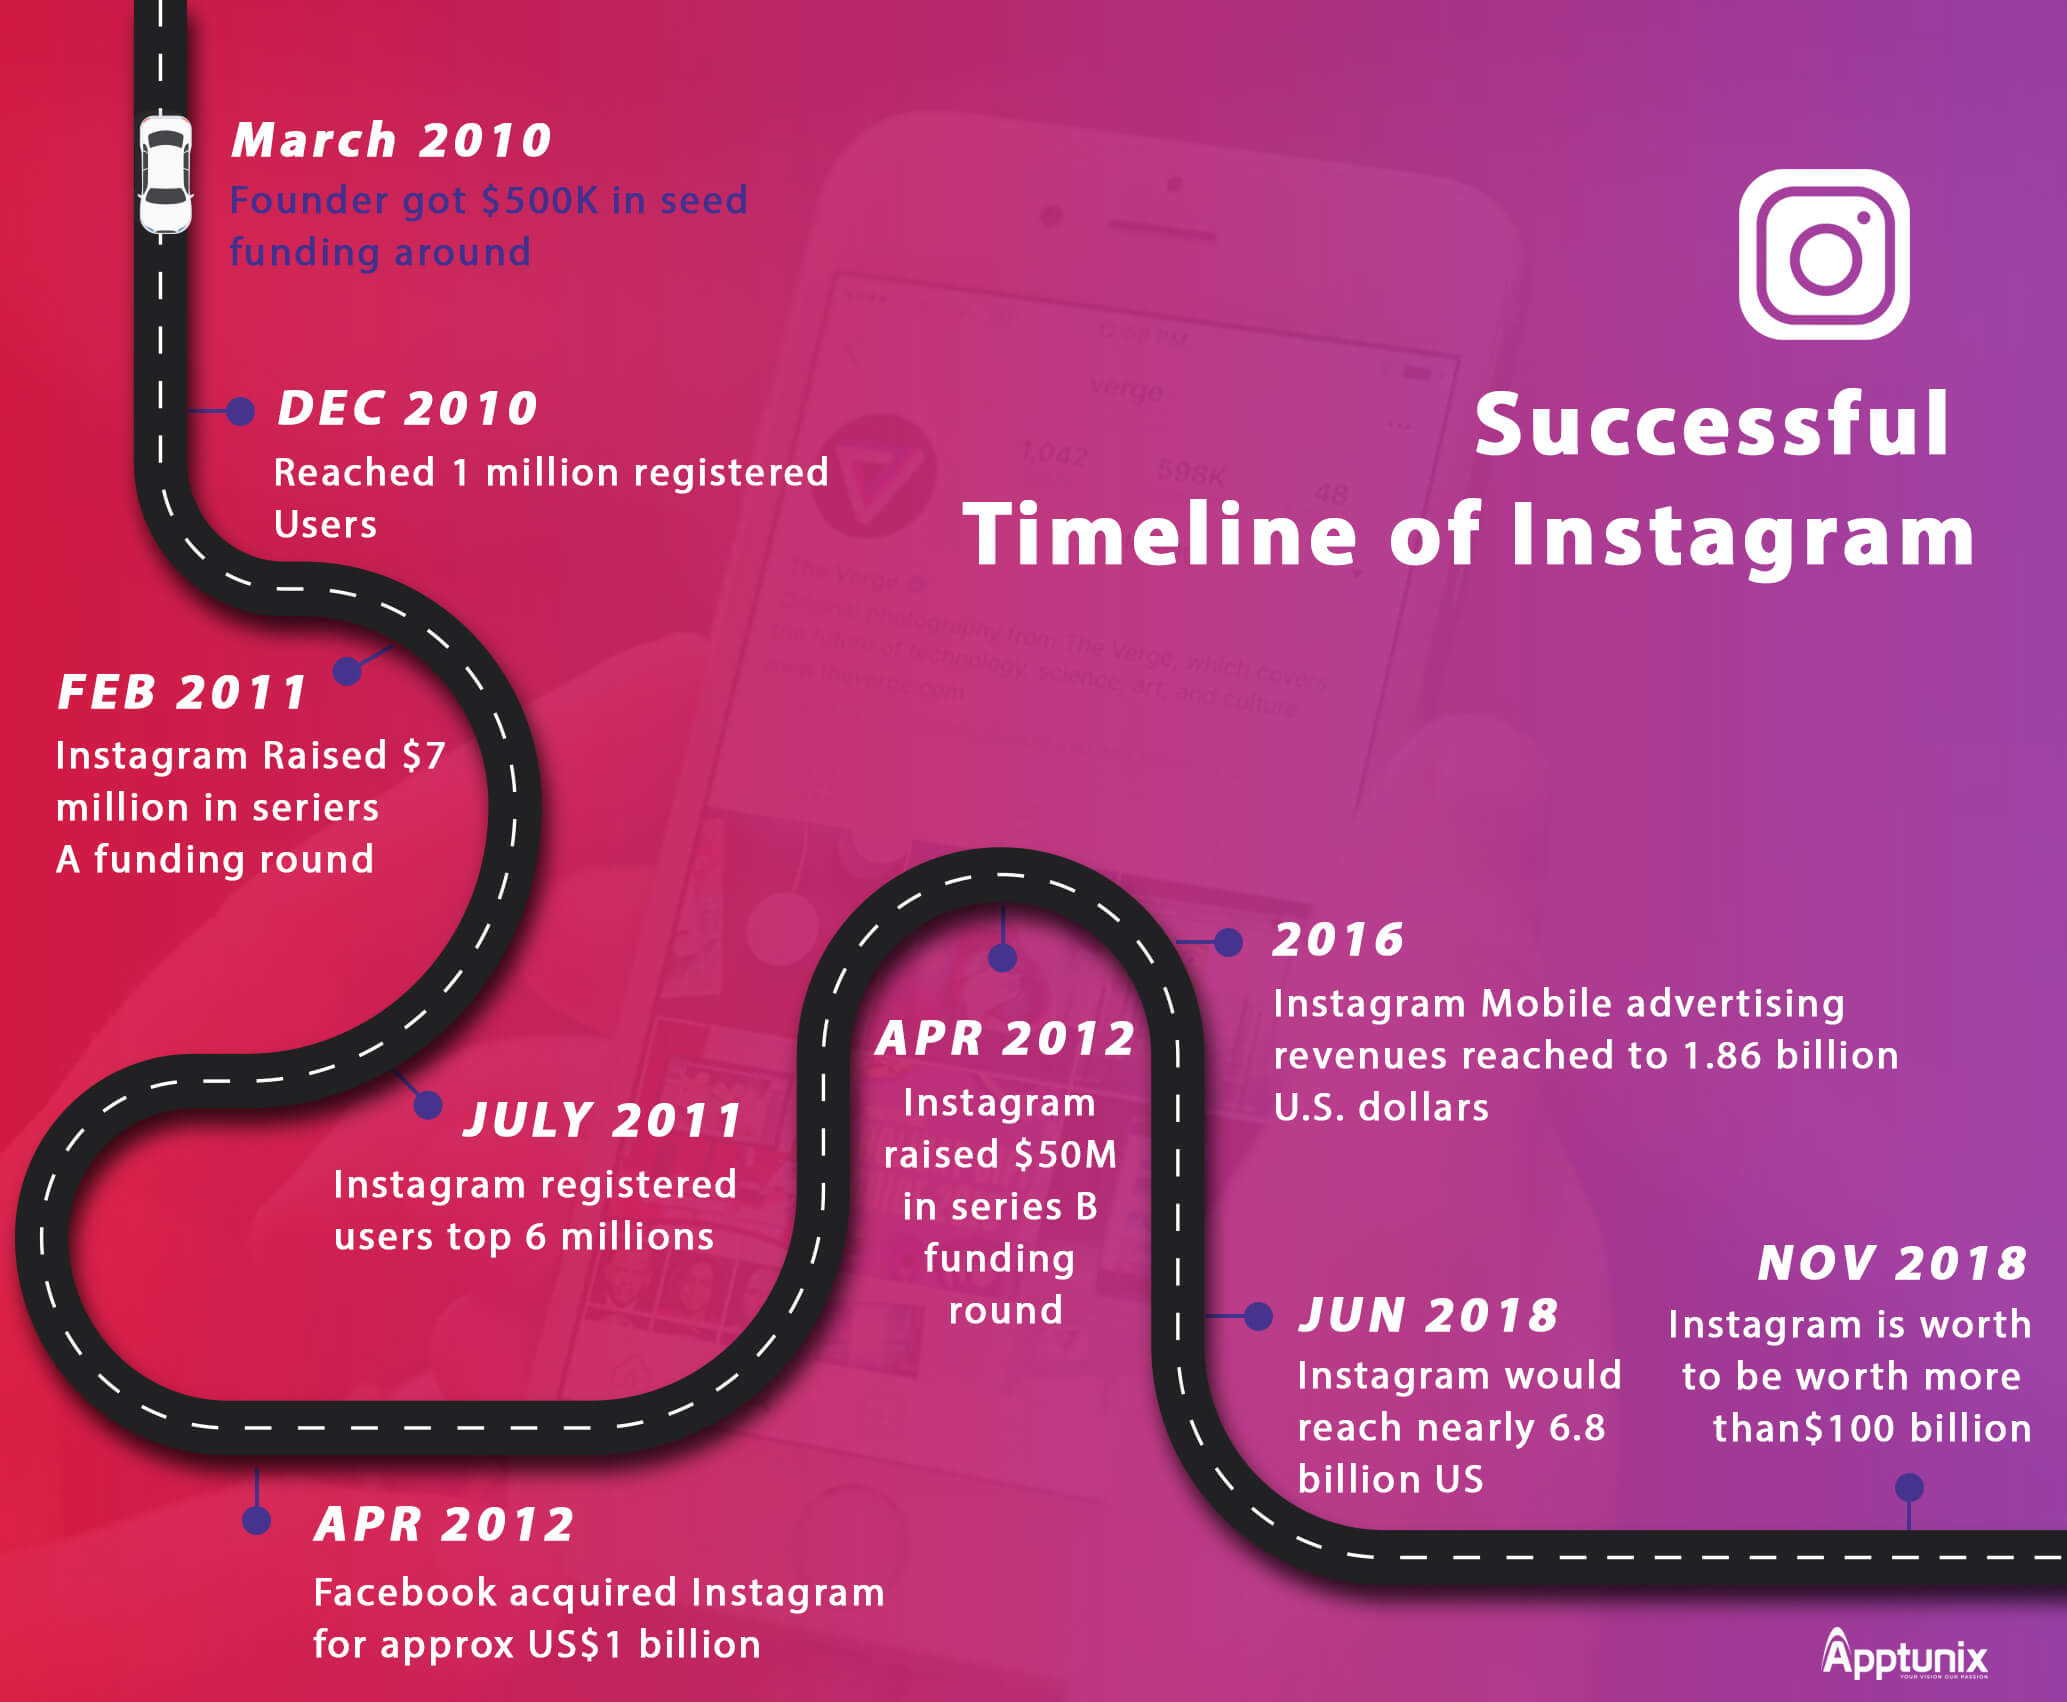 successful timeline of Instagram